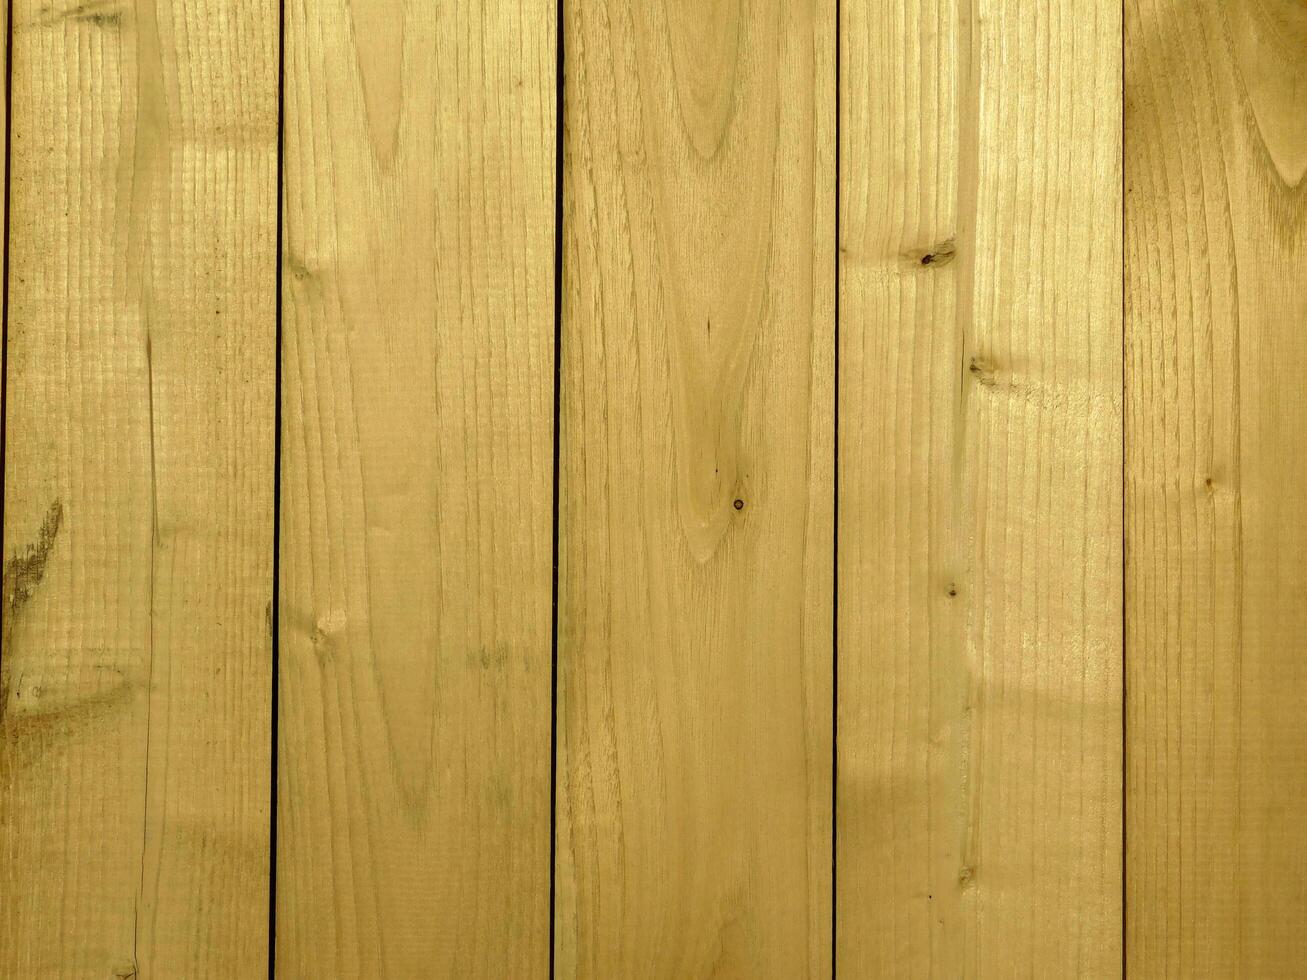 Outdoor wood texture photo